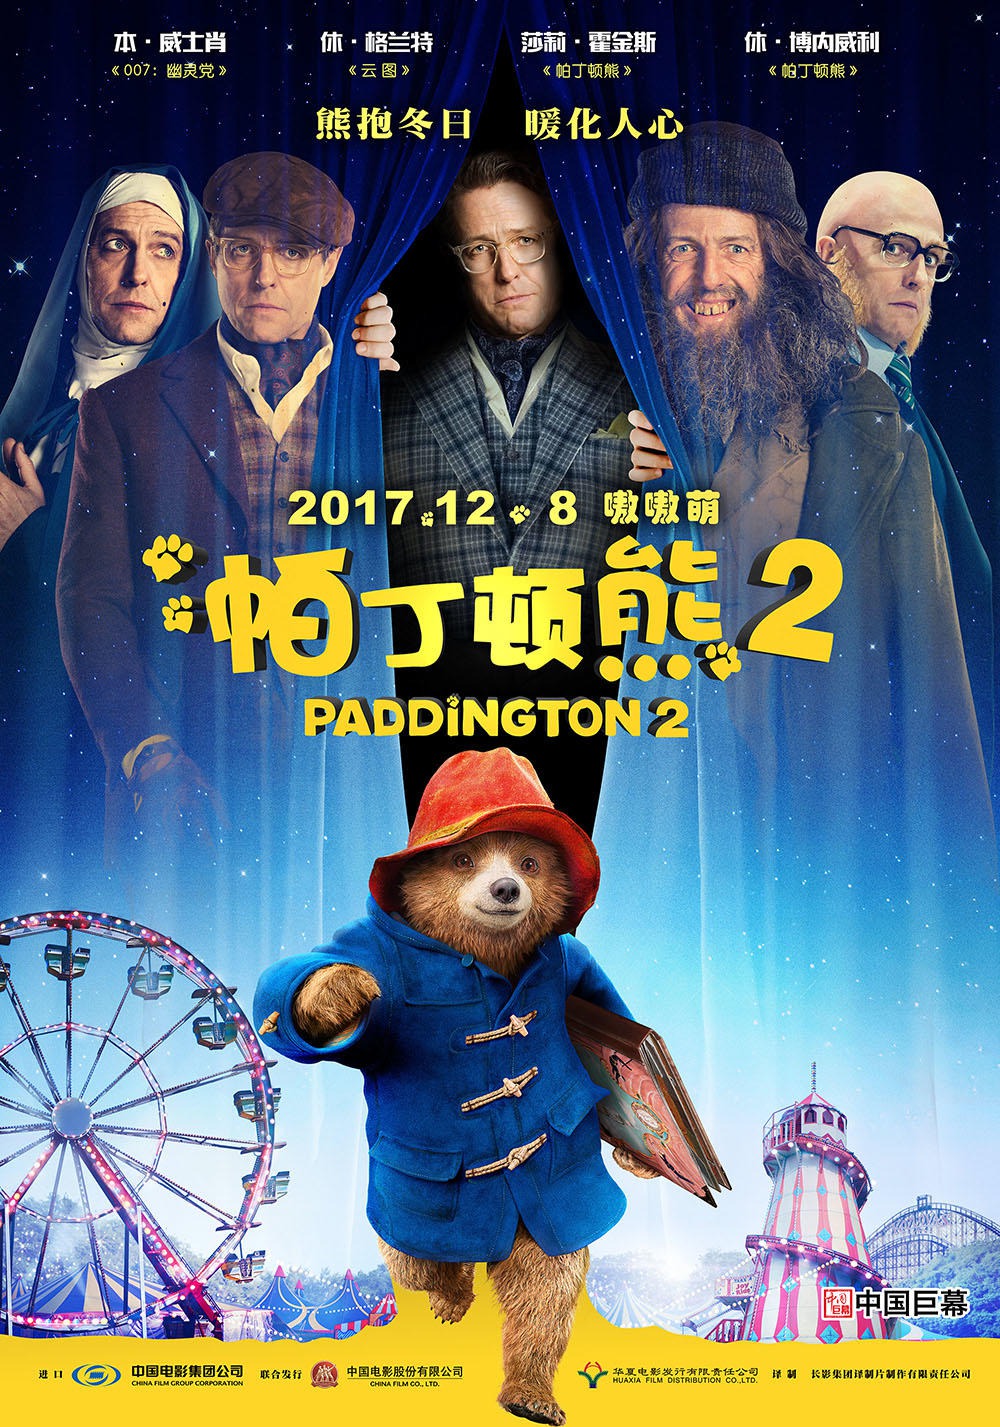 Extra Large Movie Poster Image for Paddington 2 (#23 of 31)